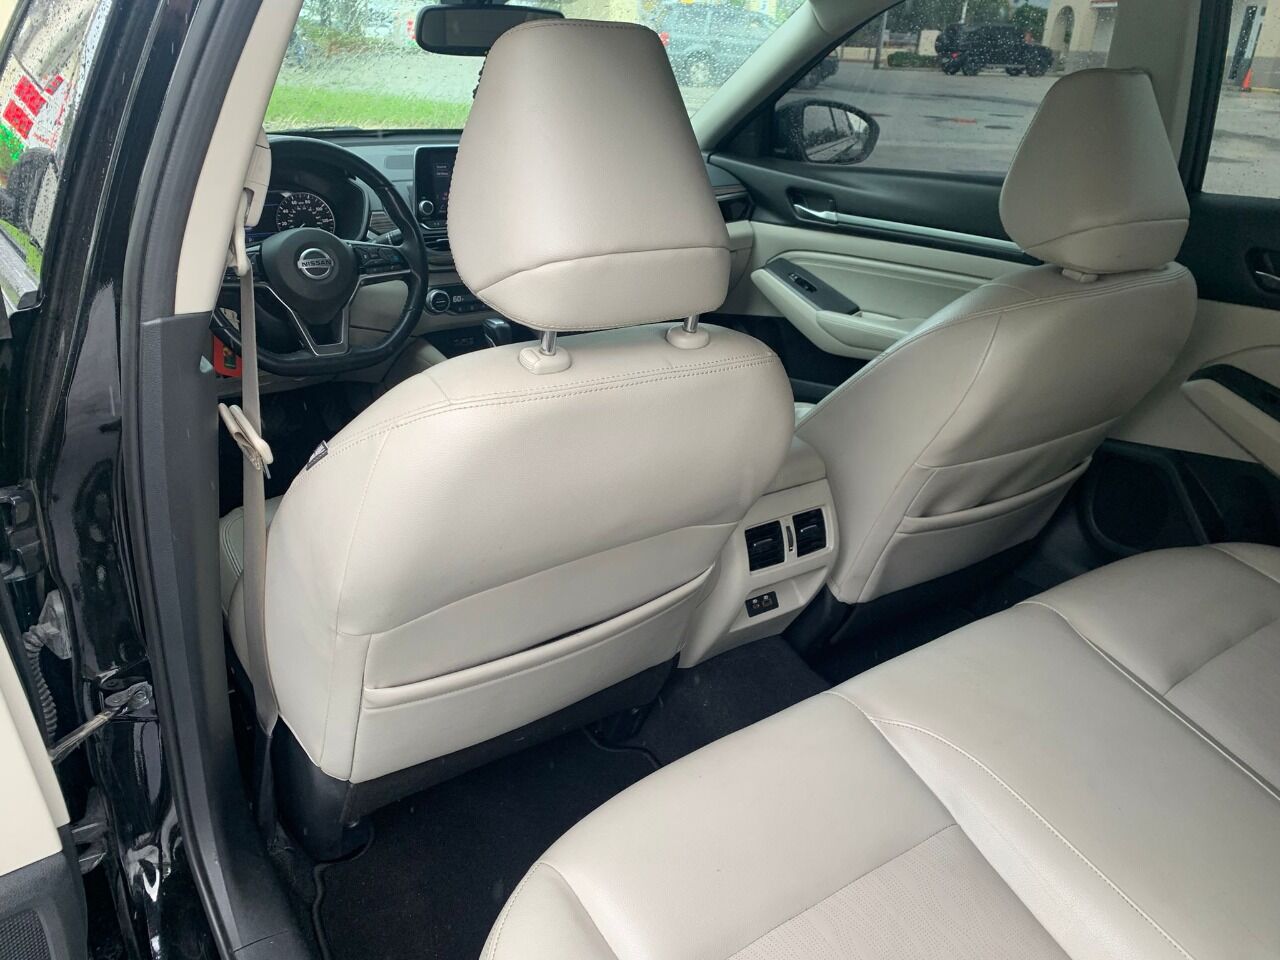 2019 NISSAN Altima Sedan - $16,900